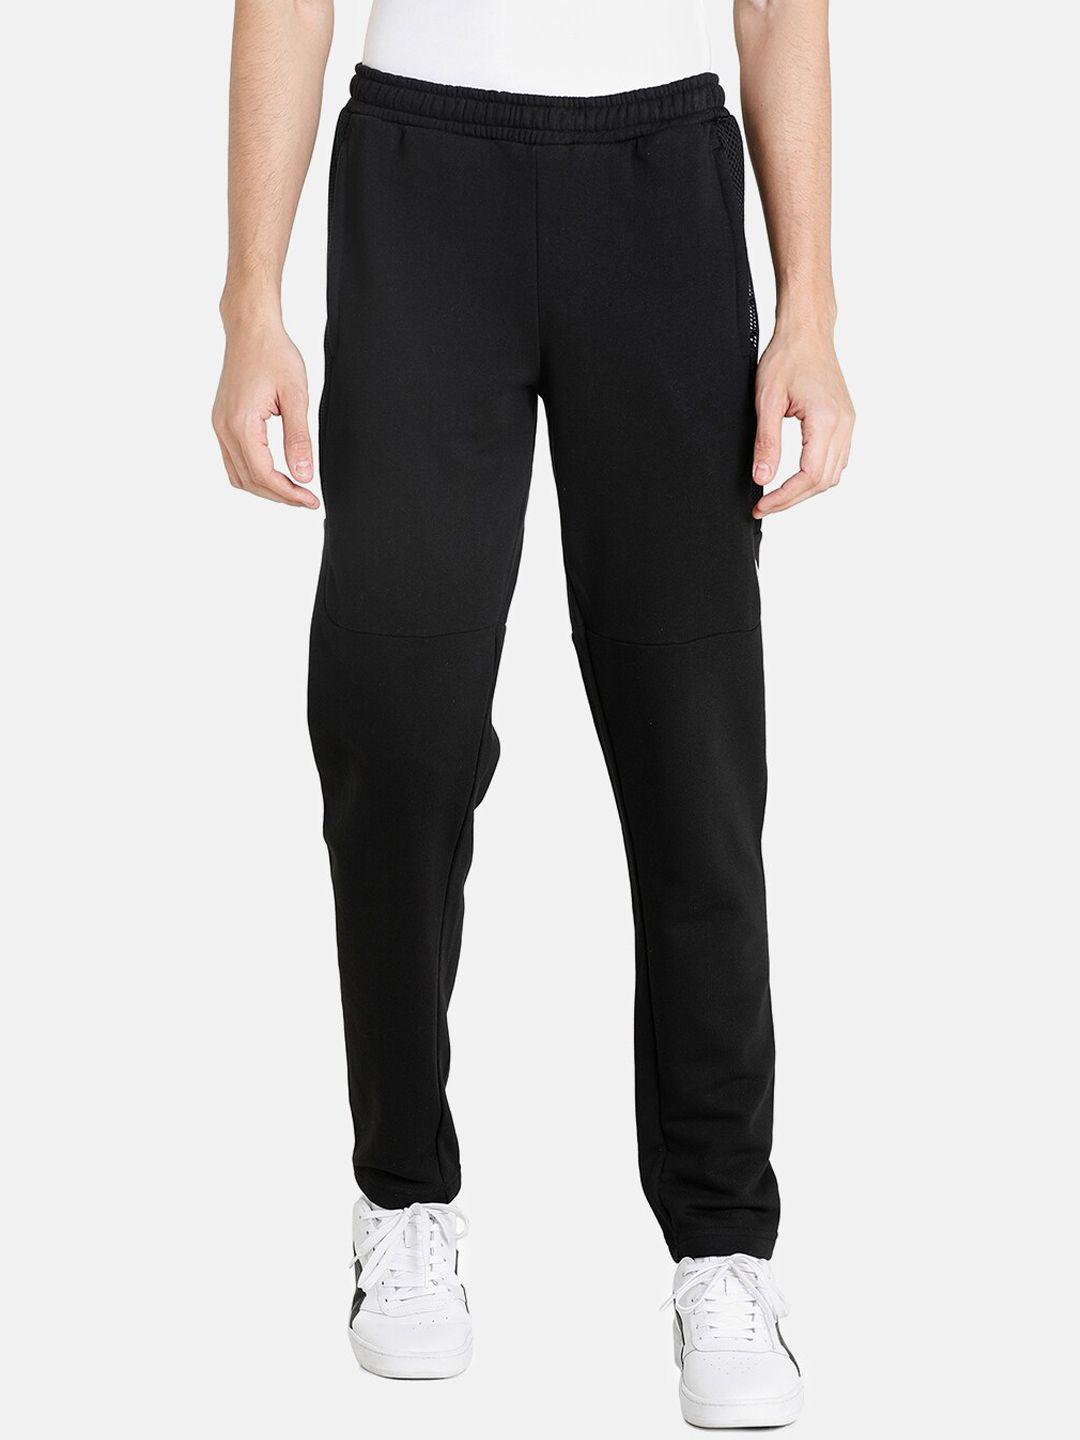 puma men black solid mesh overlay sweat pants